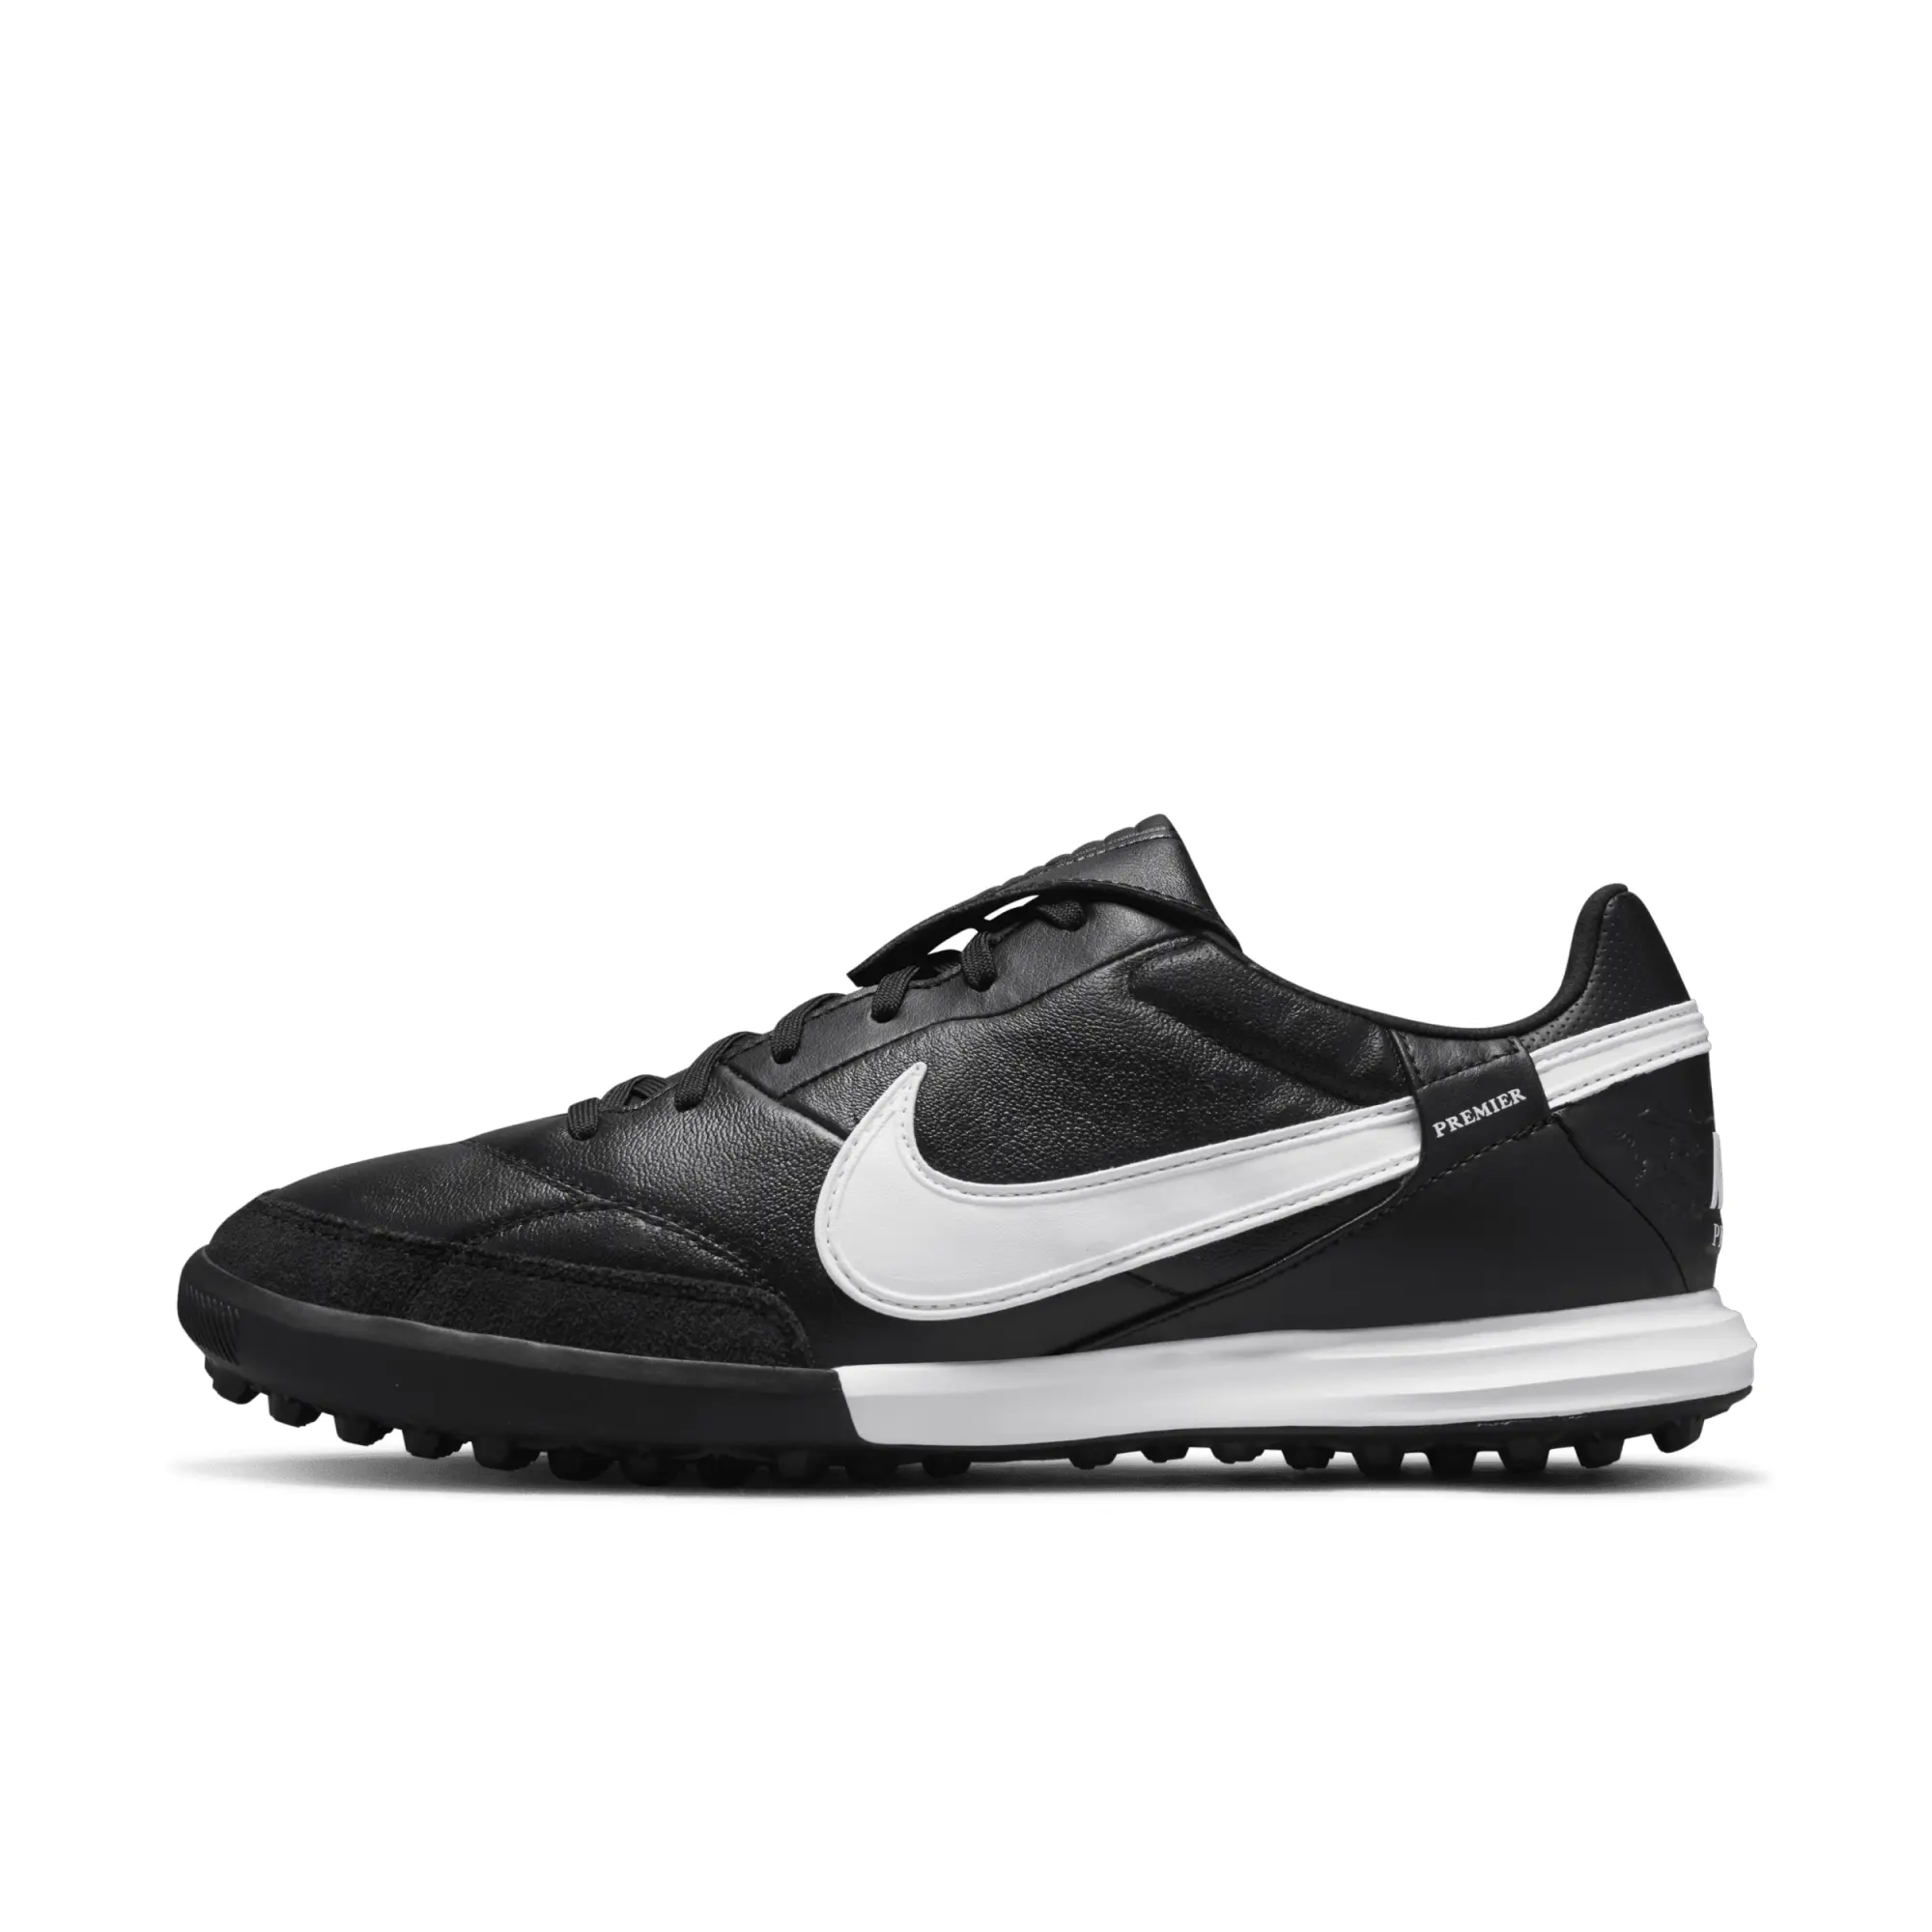 Nike Premier 3 Artificial-Turf Football Shoes - Black